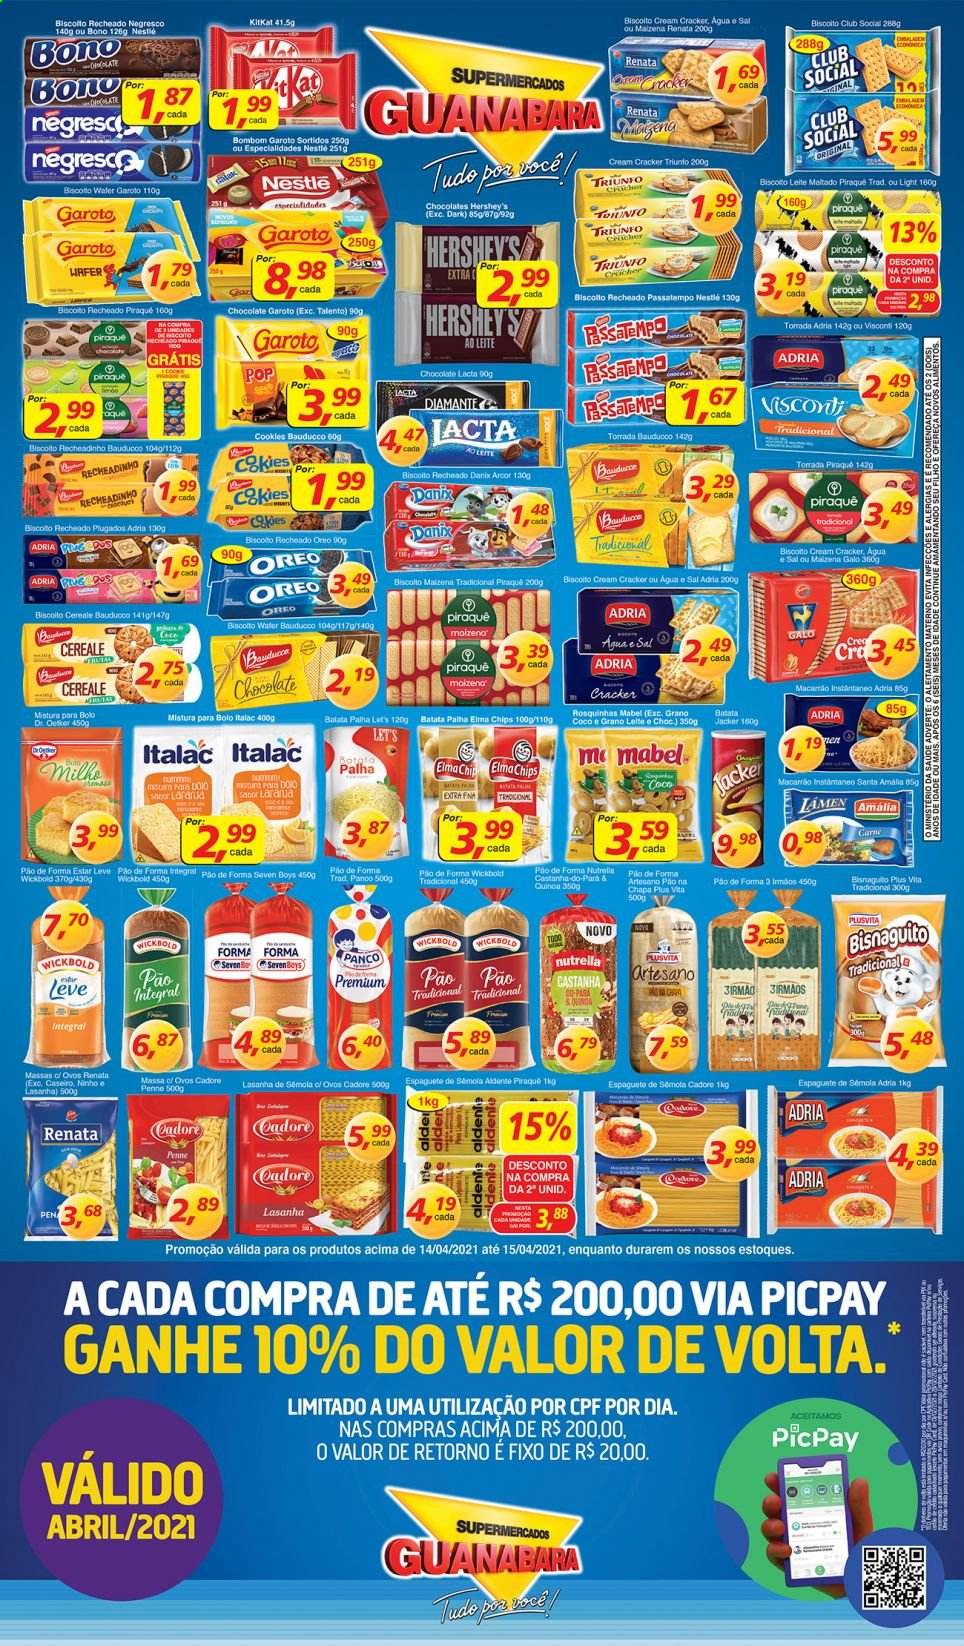 Encarte Supermercados Guanabara  - 14.04.2021 - 15.04.2021.